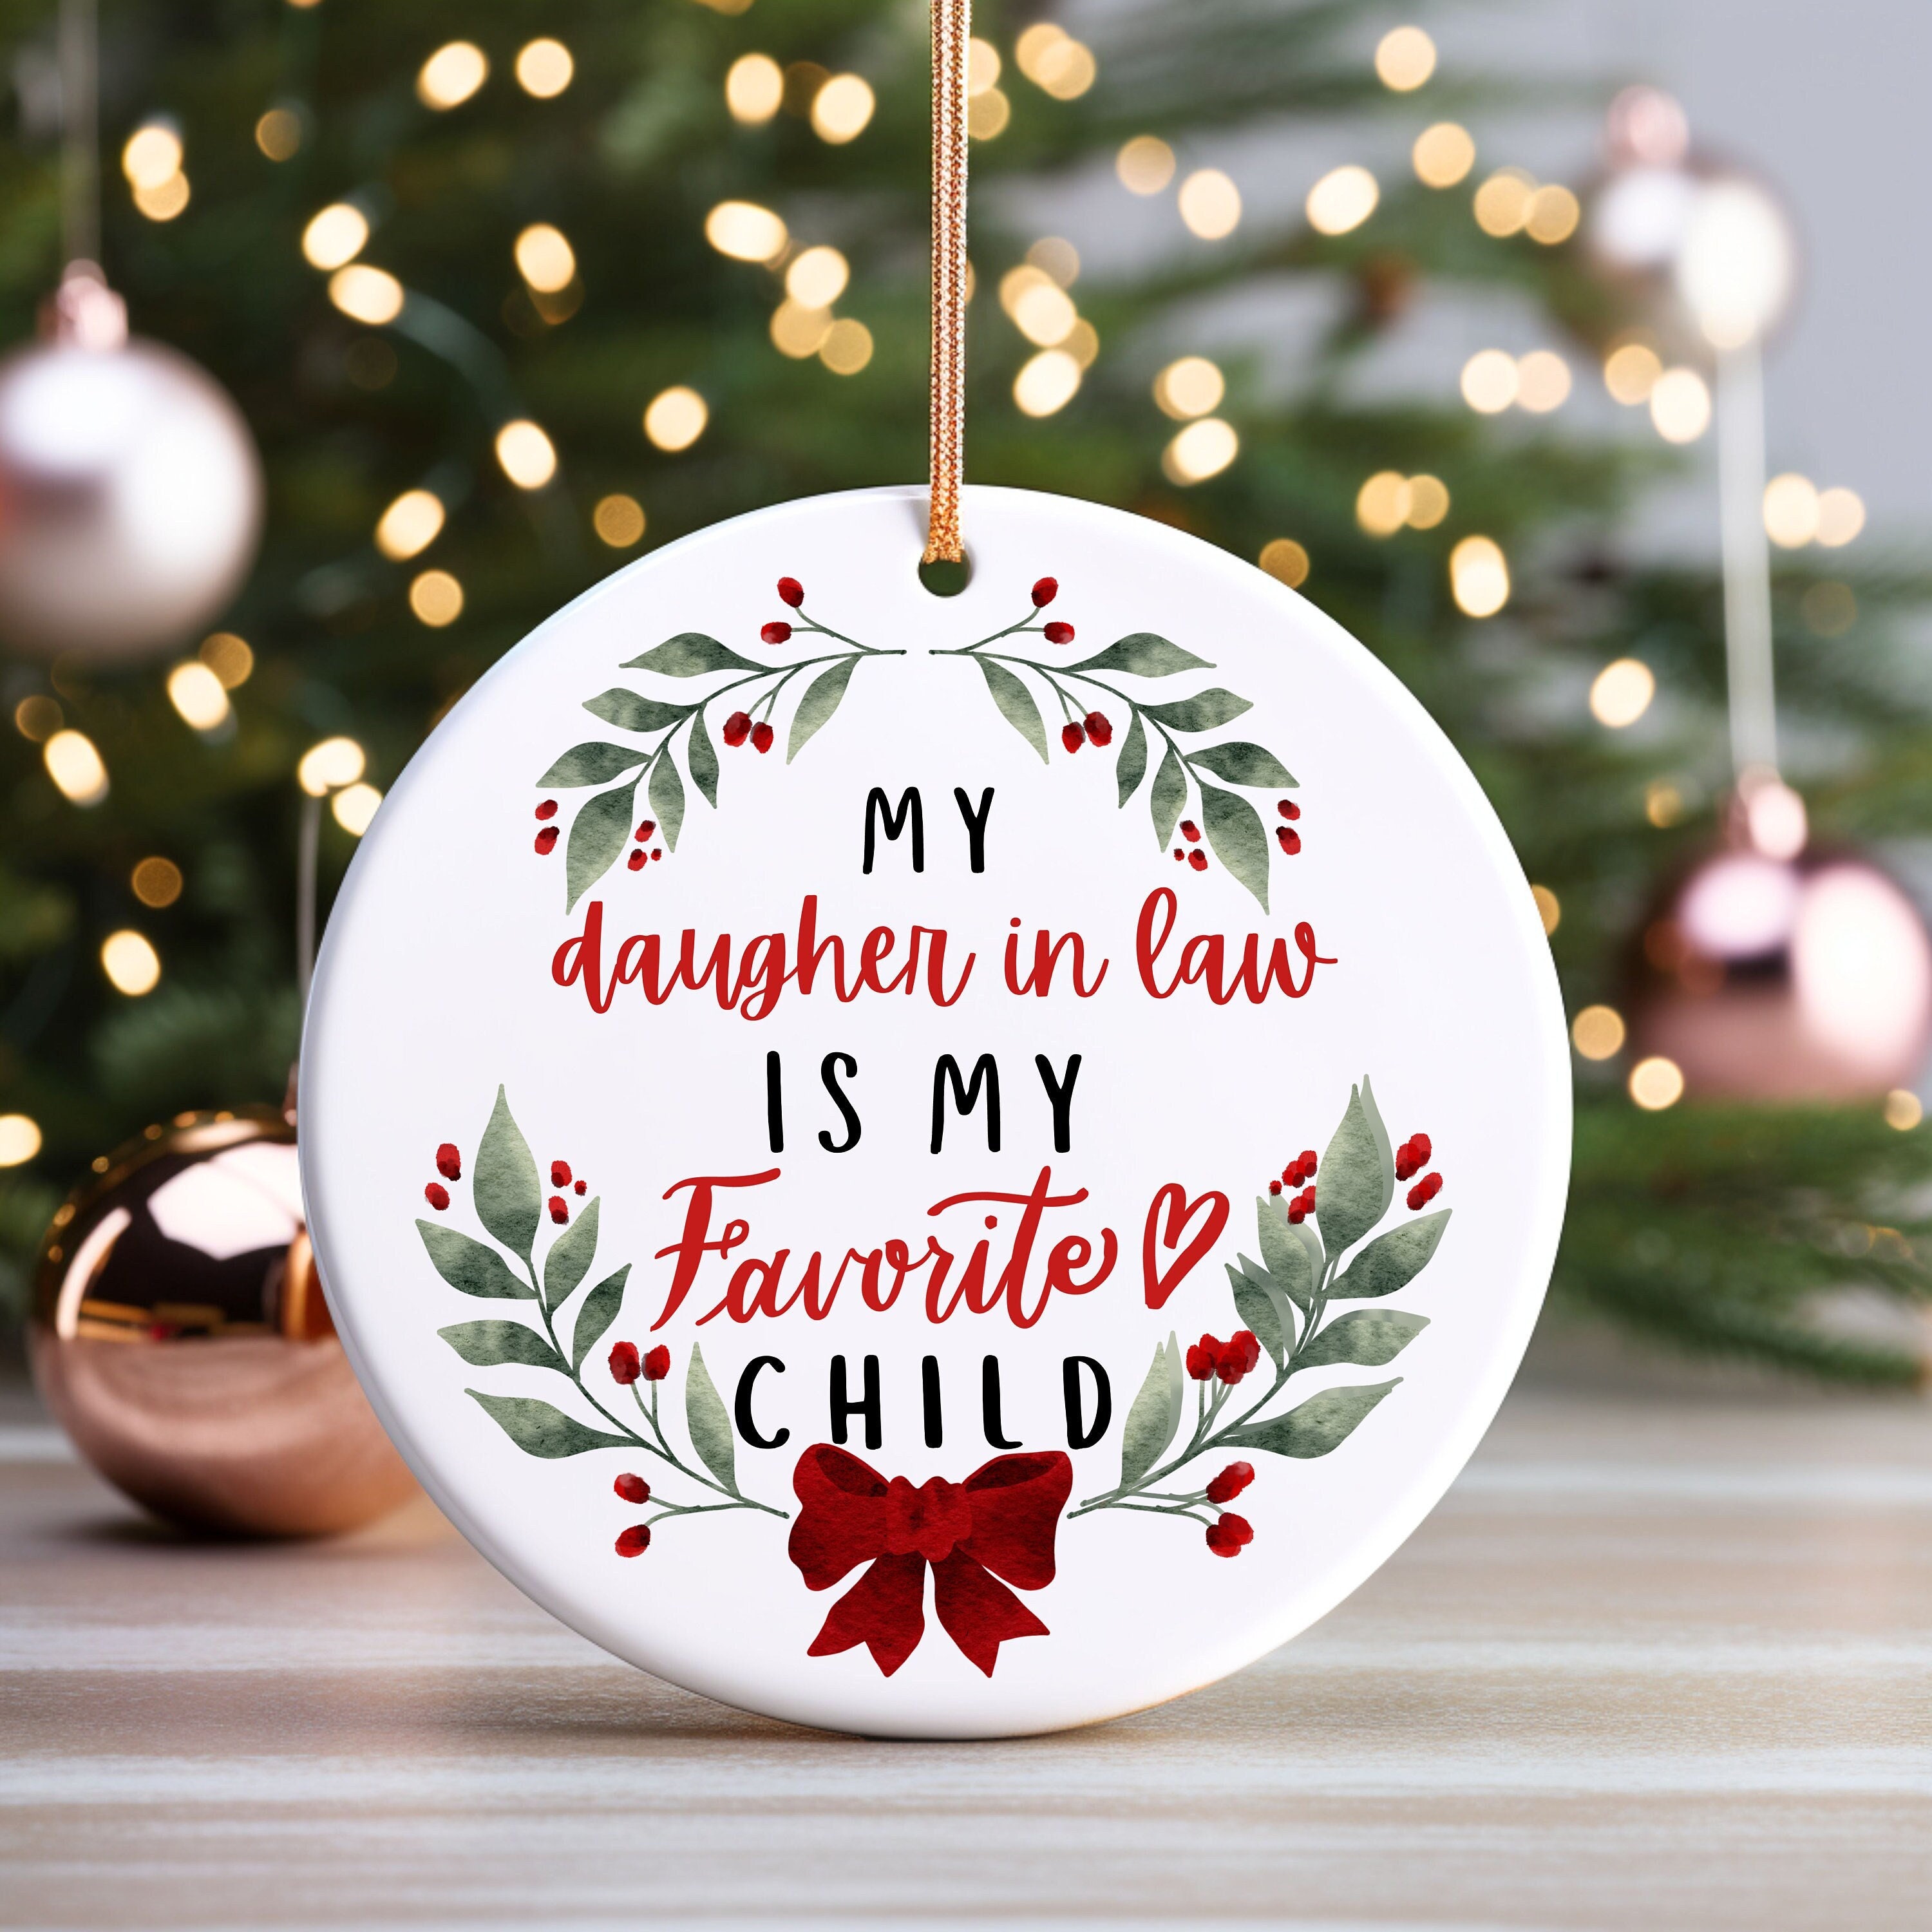 My Favorite Christmas Ornaments — Palmettos & Pineapples